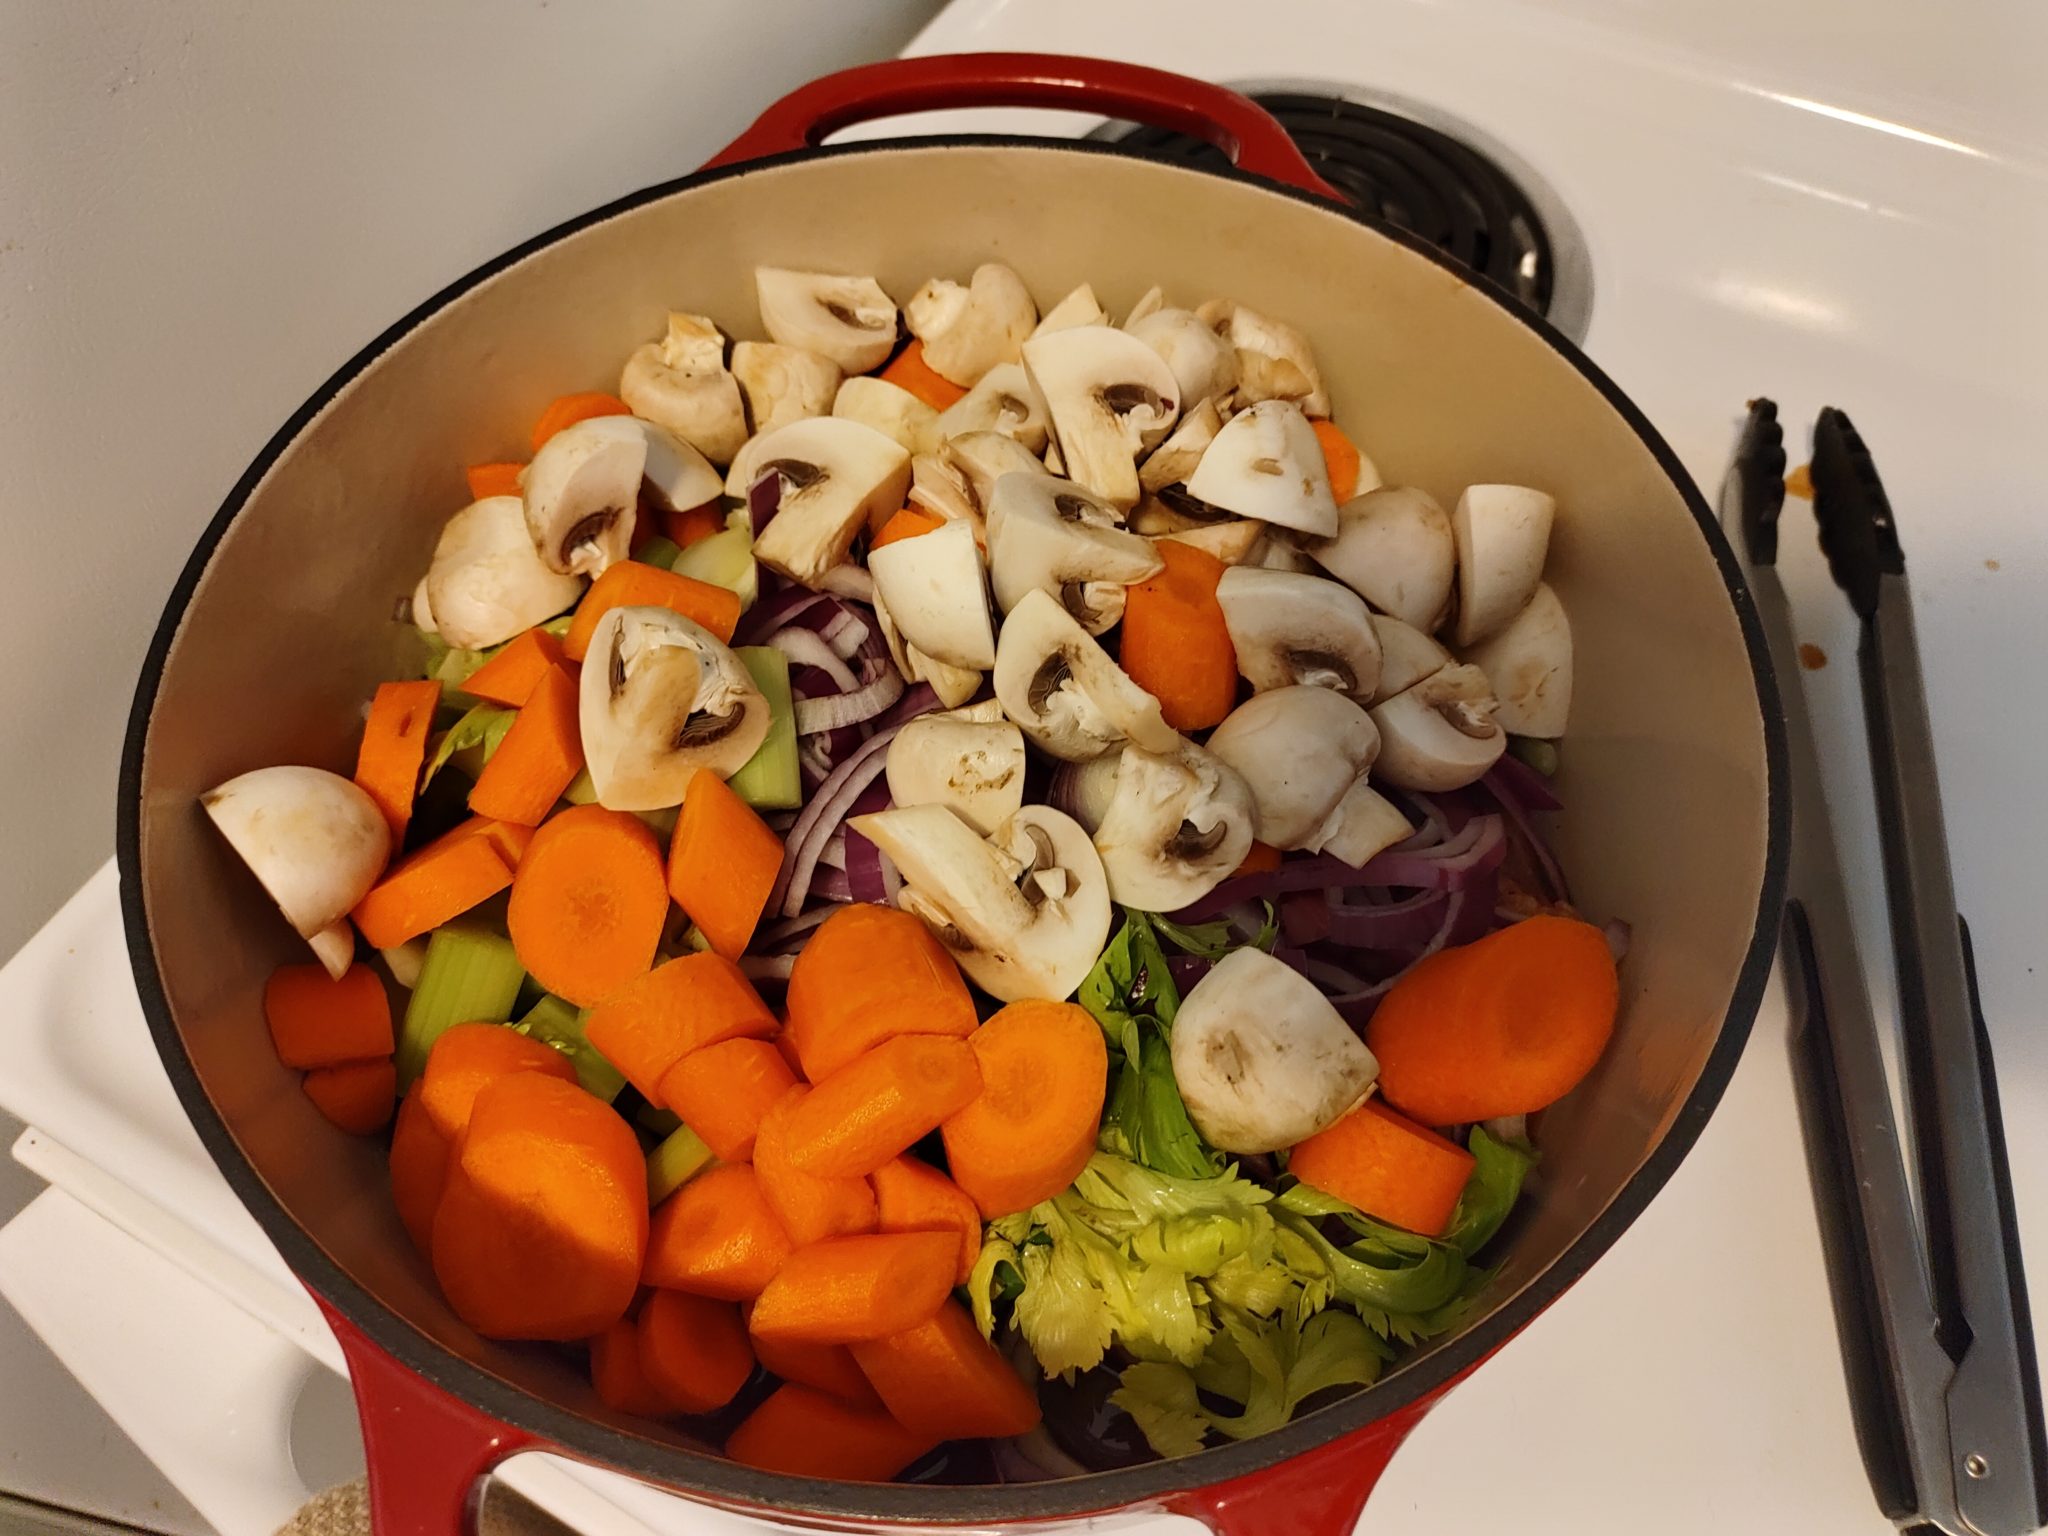 large pot full of vegetables